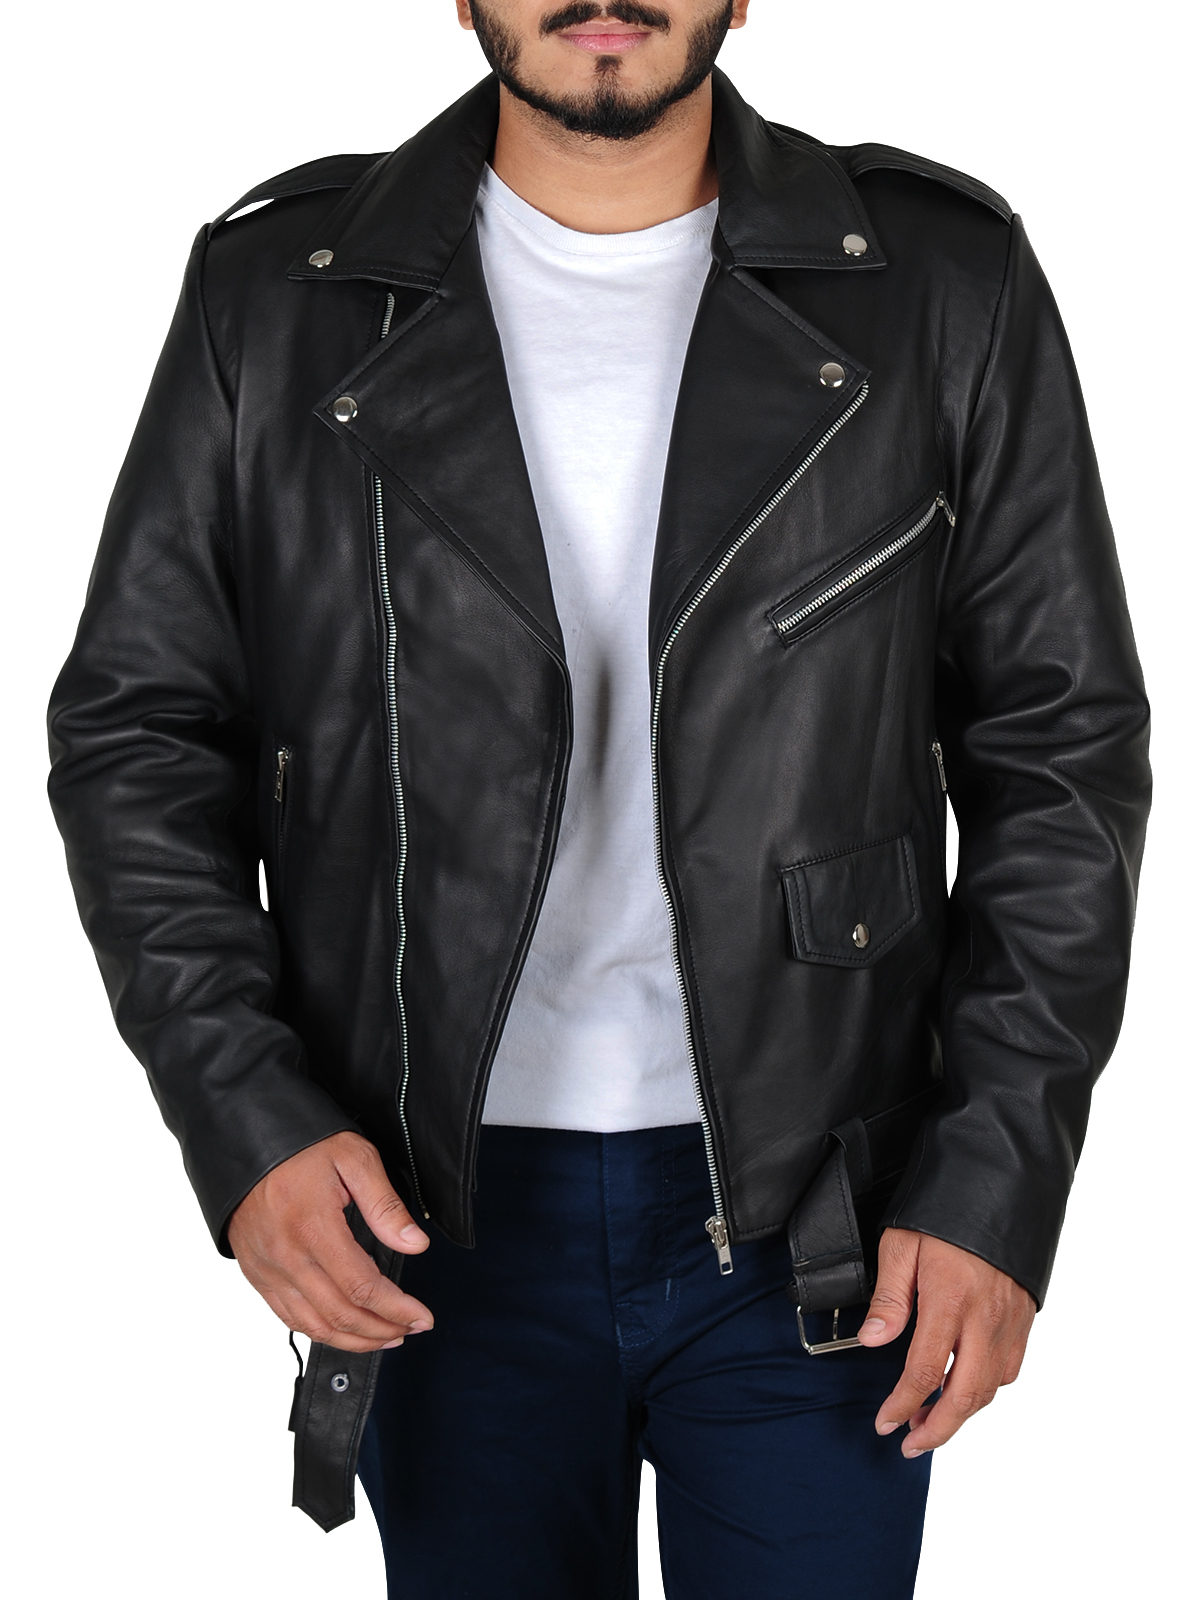 Wwe Triple H Black Leather Jacket - RockStar Jacket